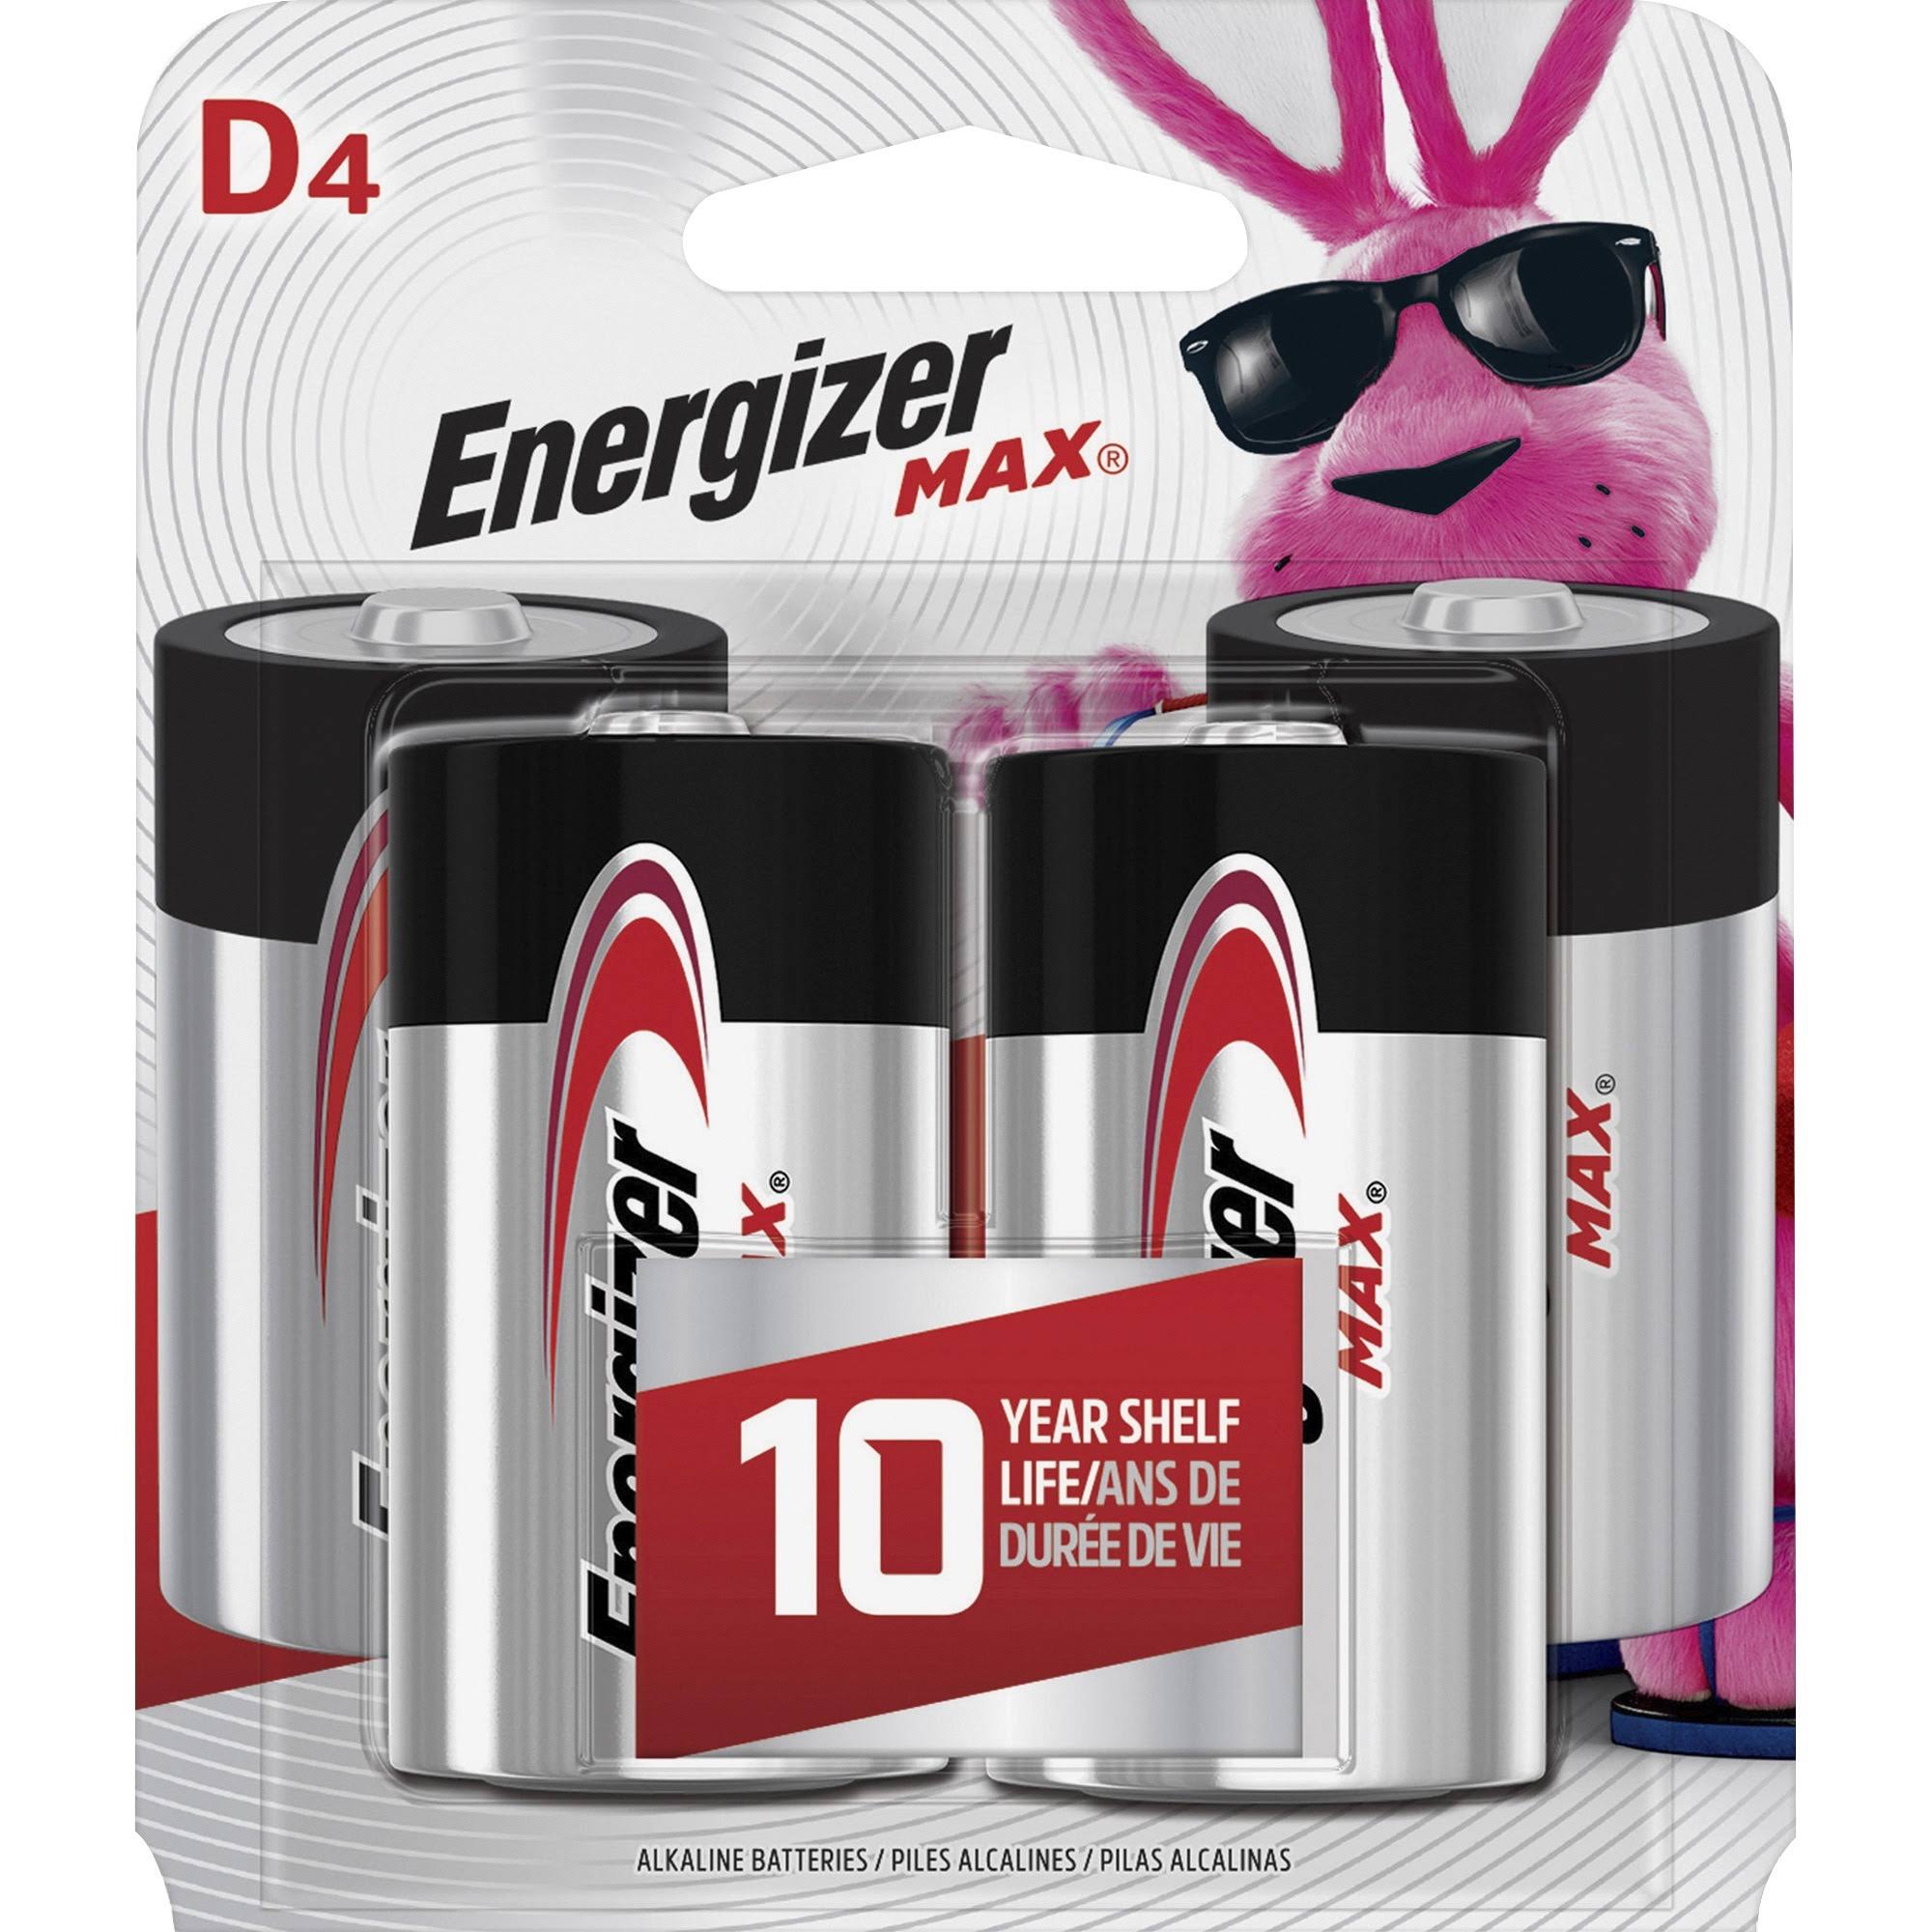 Energizer Max D4 Alkaline Batteries - 4 Pack